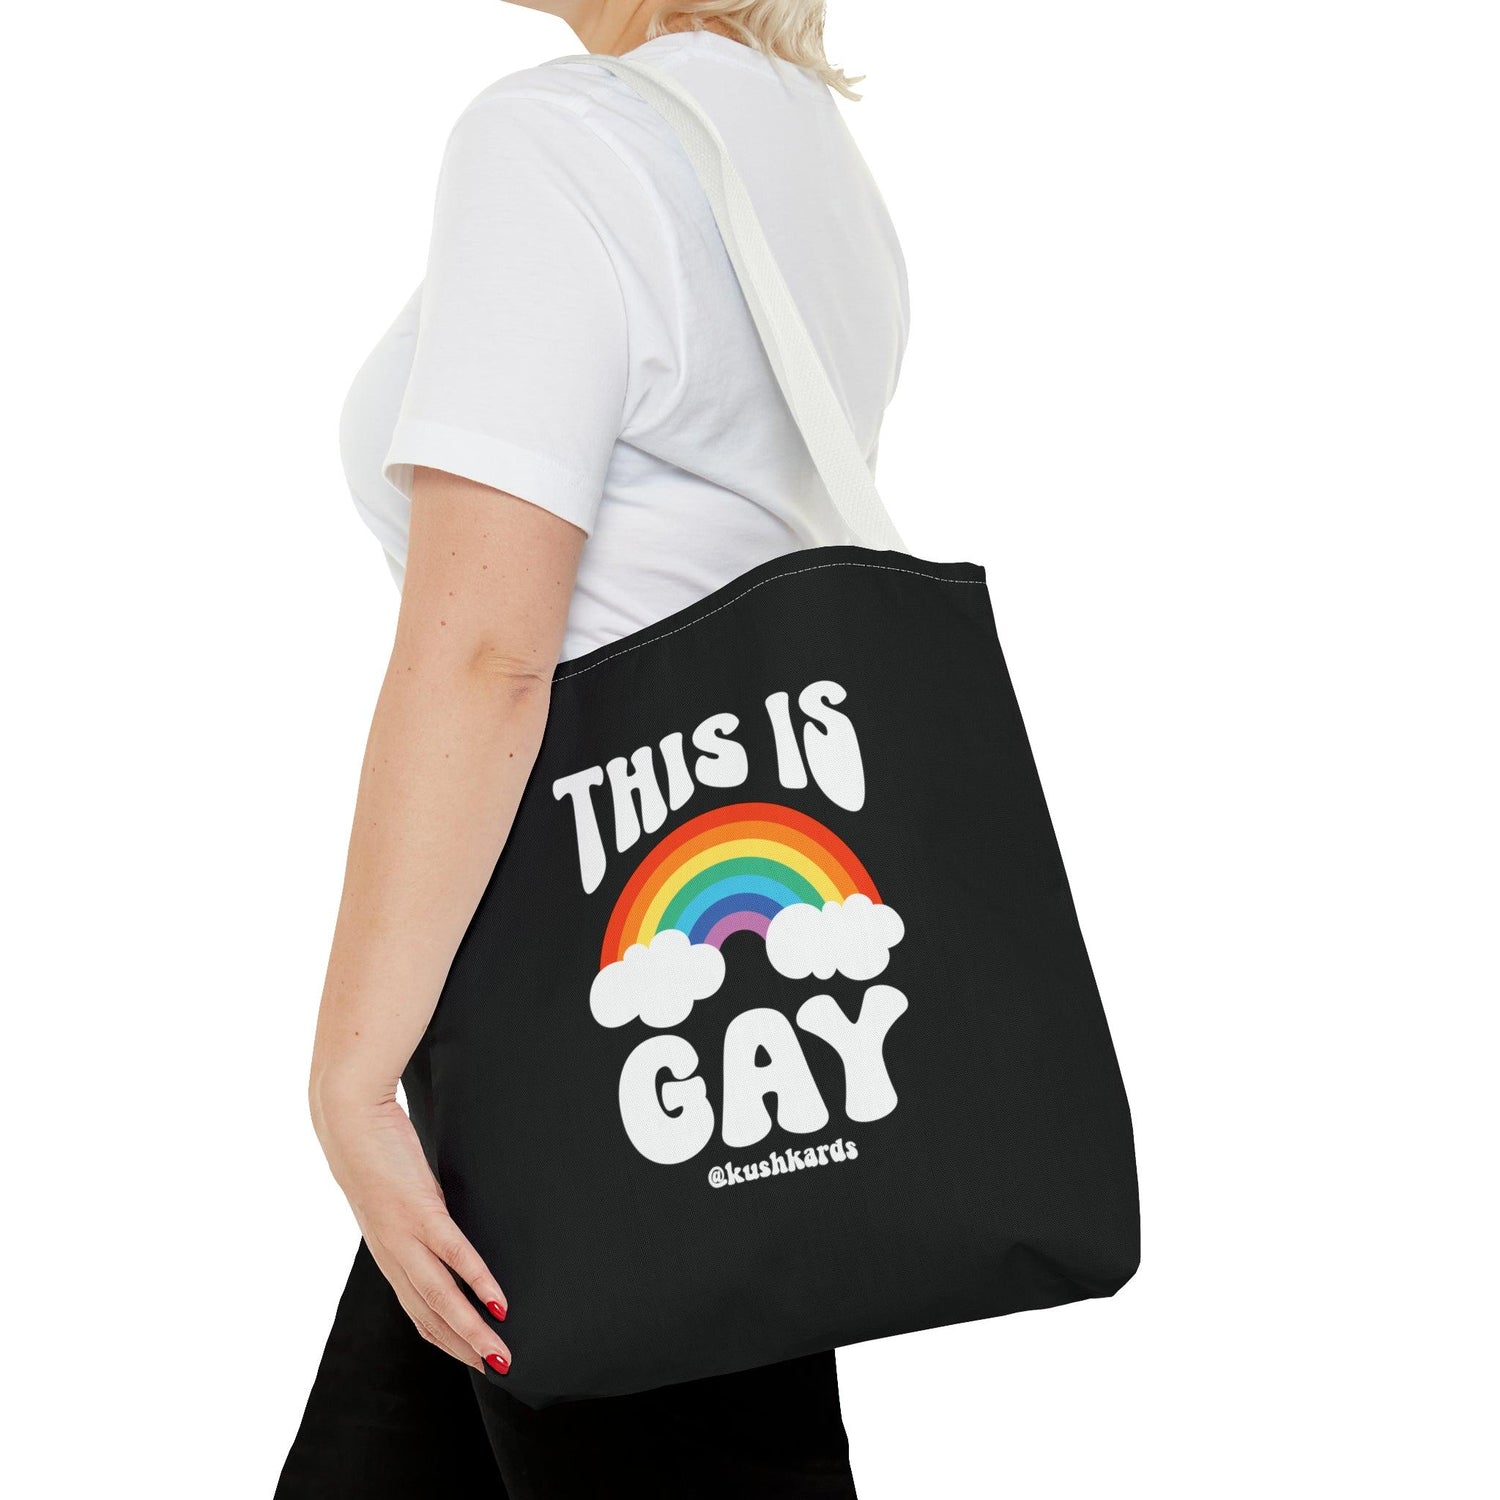 This Is Gay Clouds Tote Bag